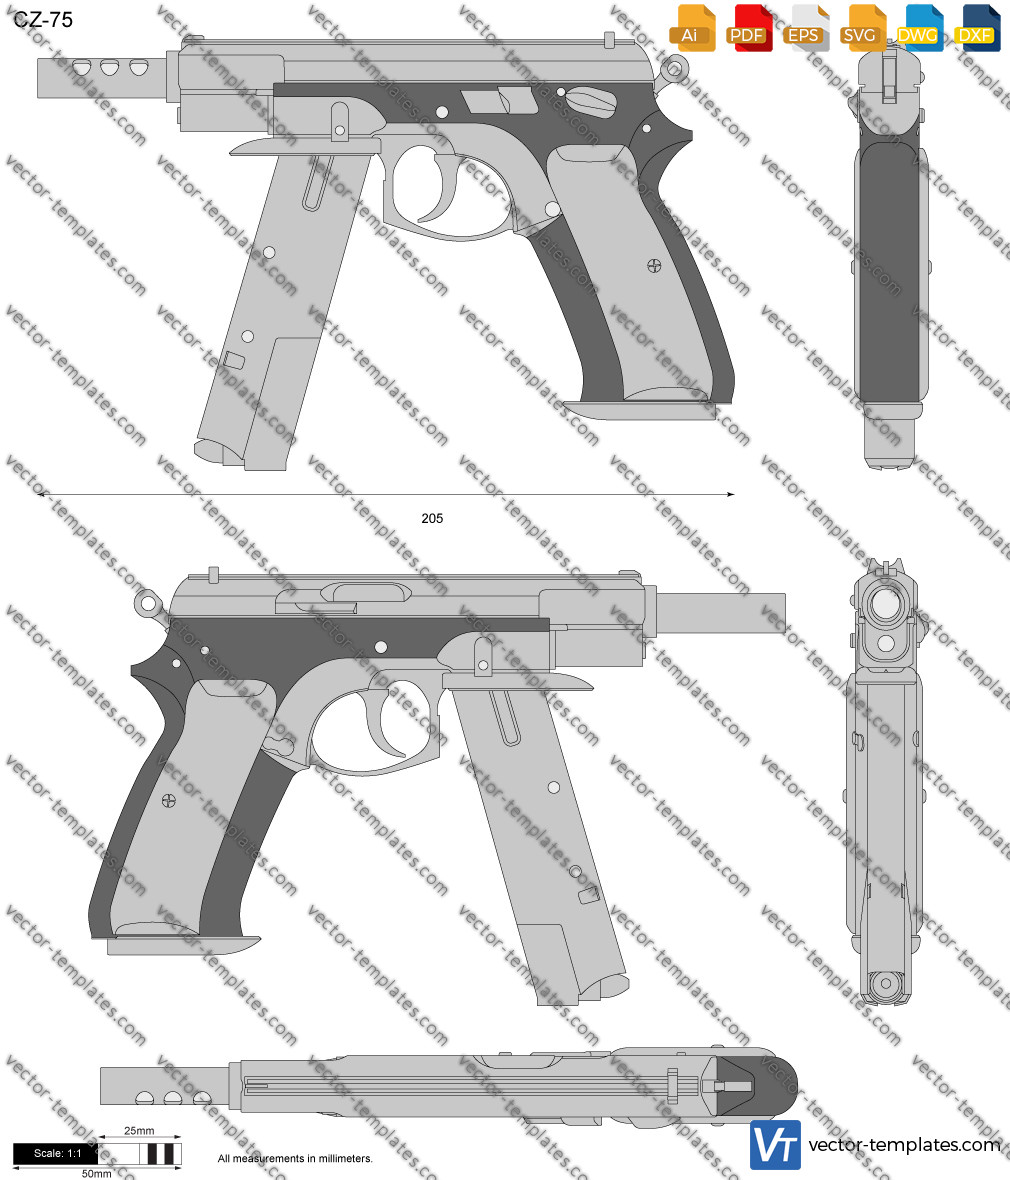 Templates - Weapons - Pistols - CZ-75